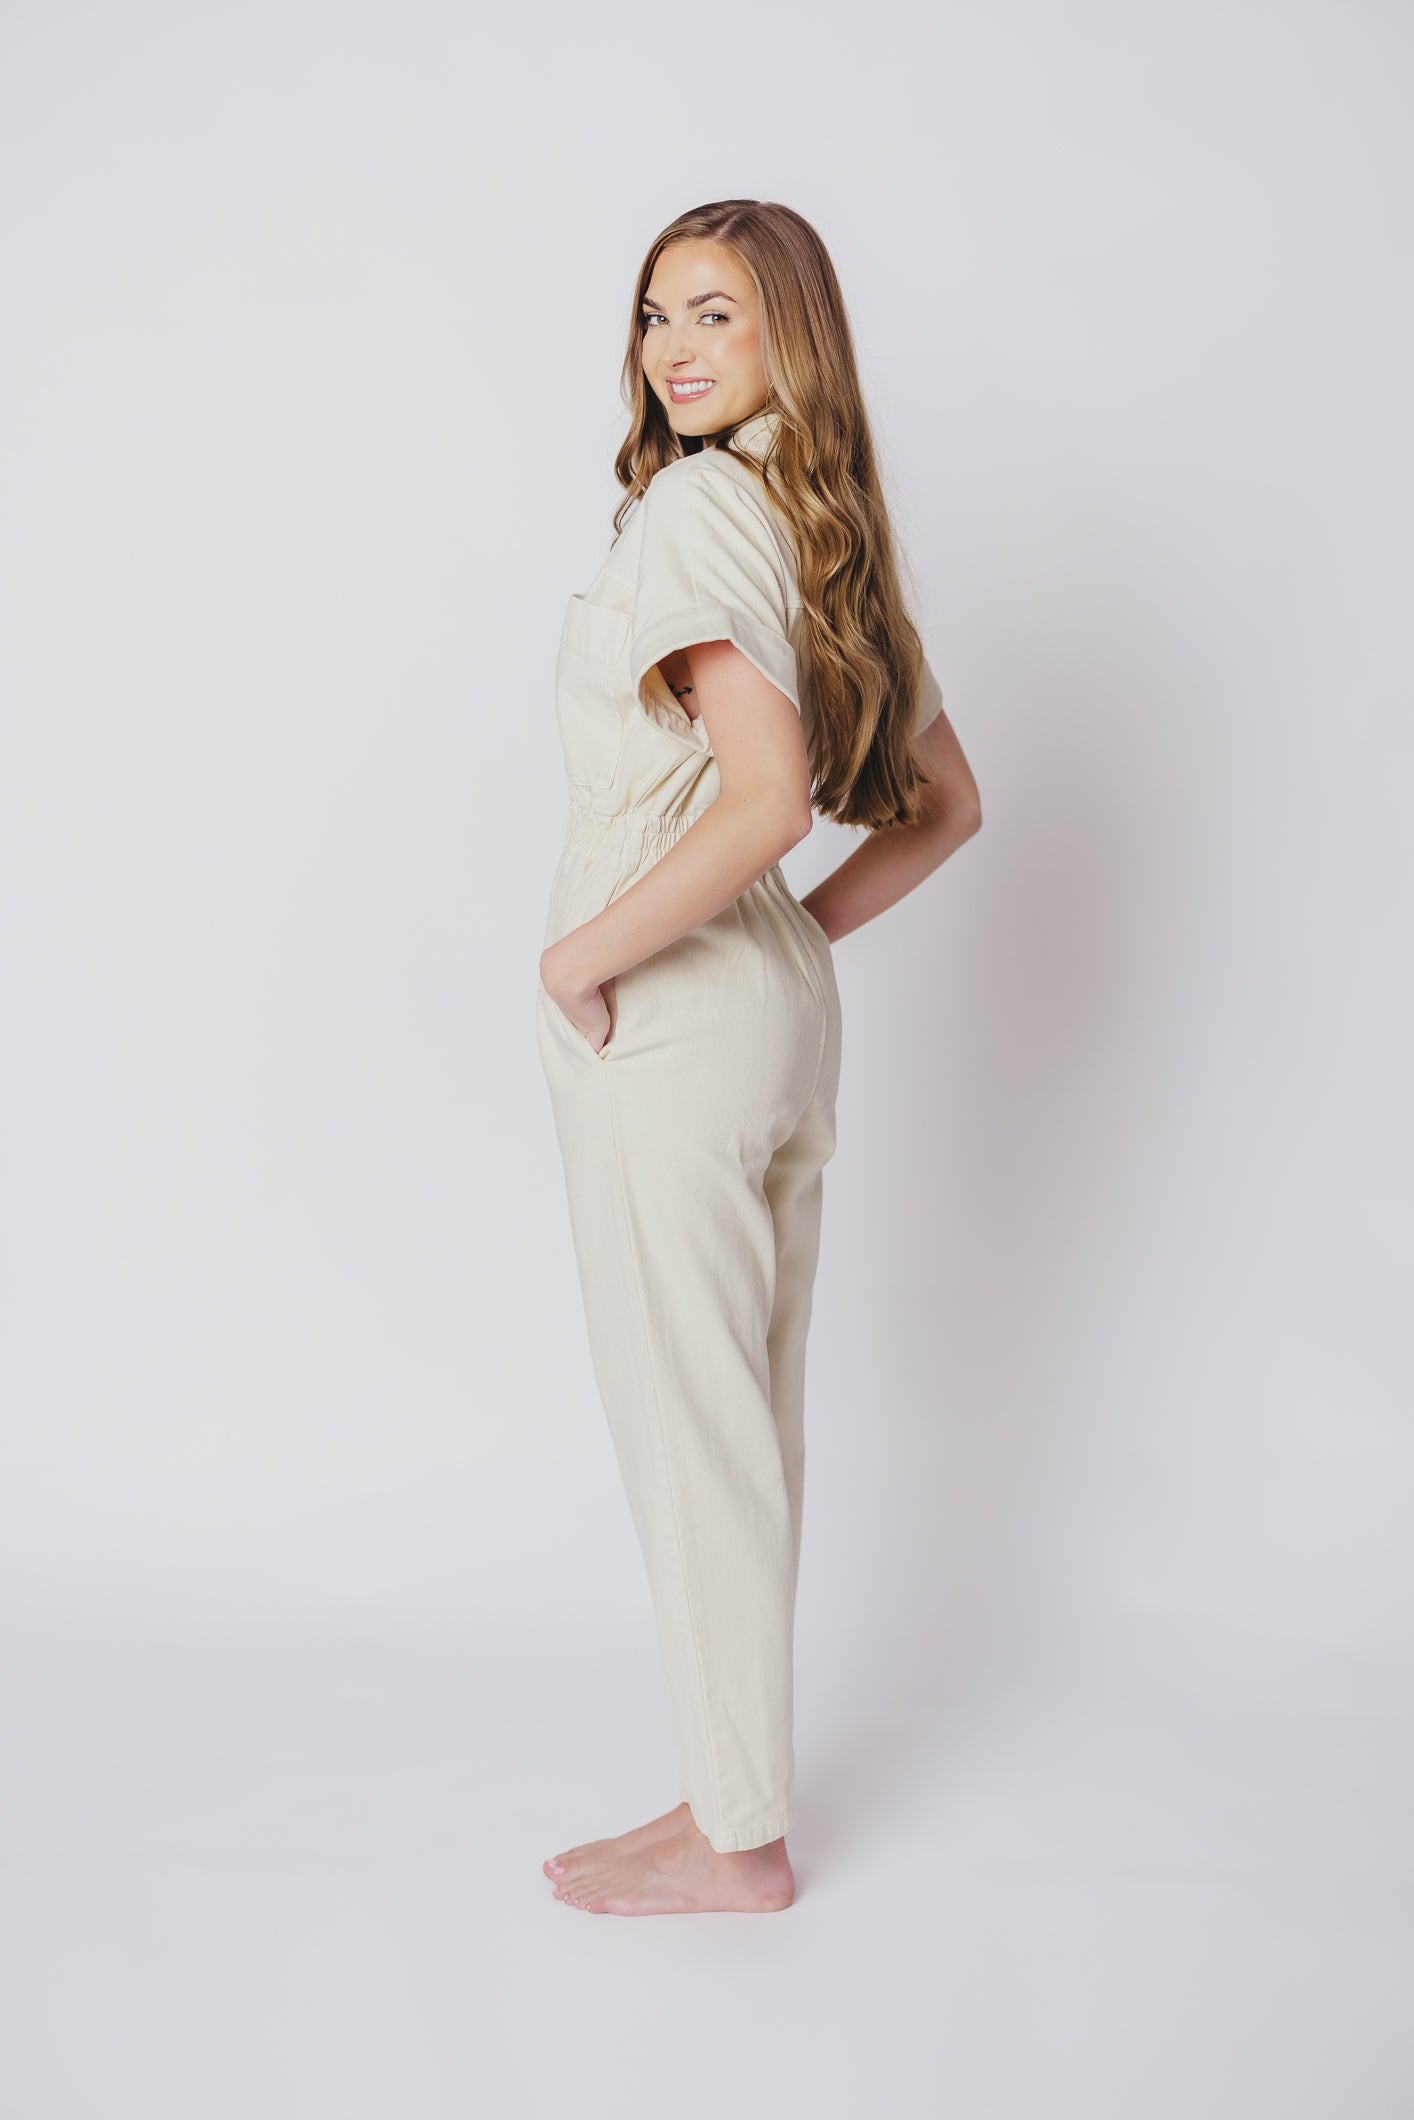 Saylor 100% Cotton Short-Sleeved Jumpsuit in Beige - Nursing Friendly